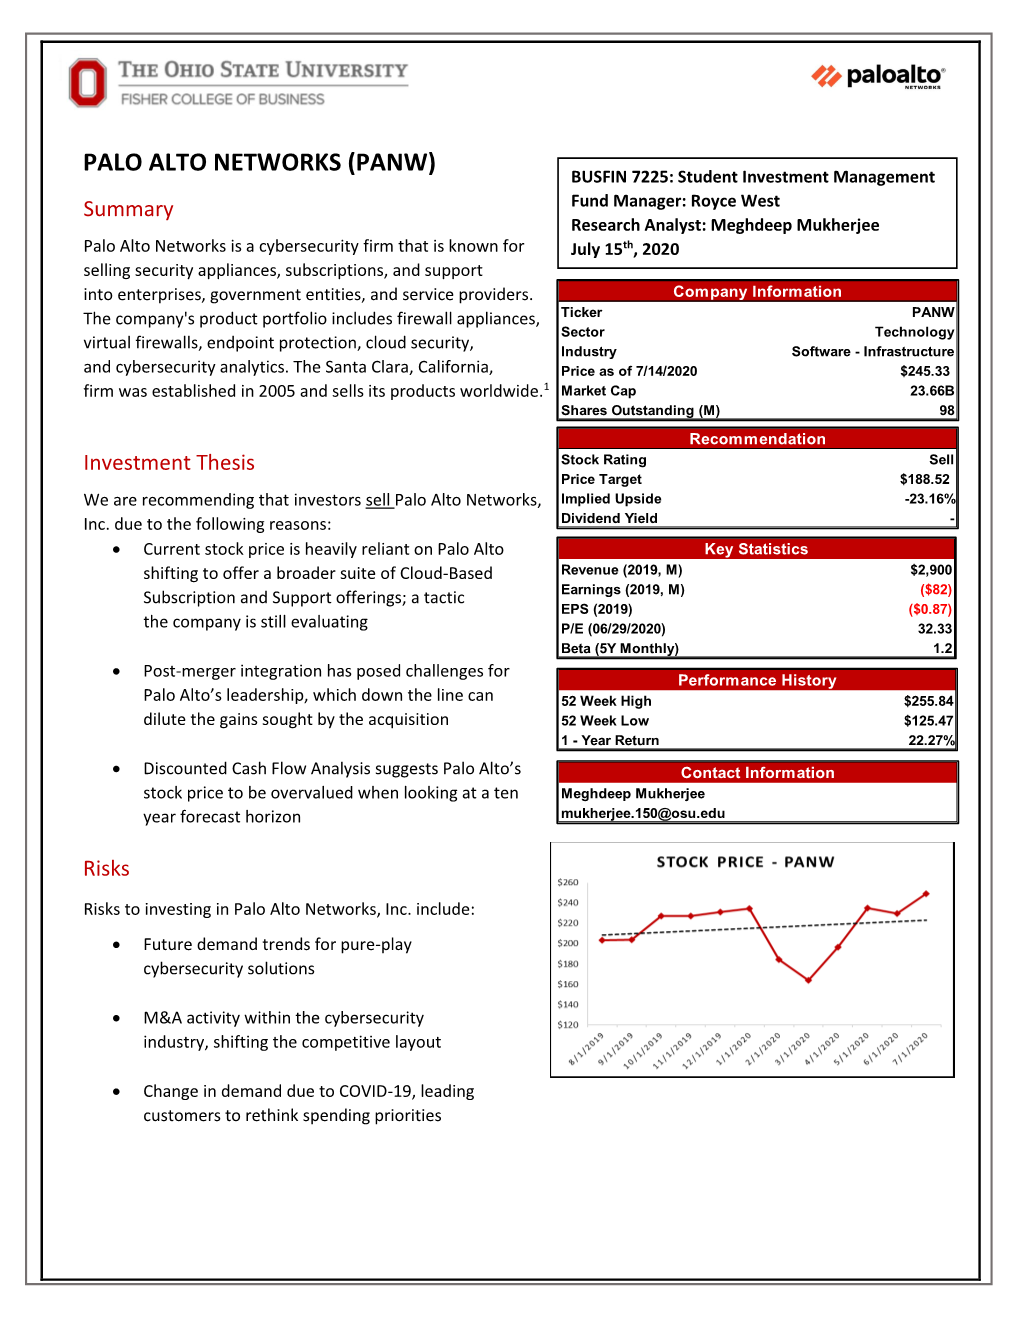 Palo Alto Networks (Panw)